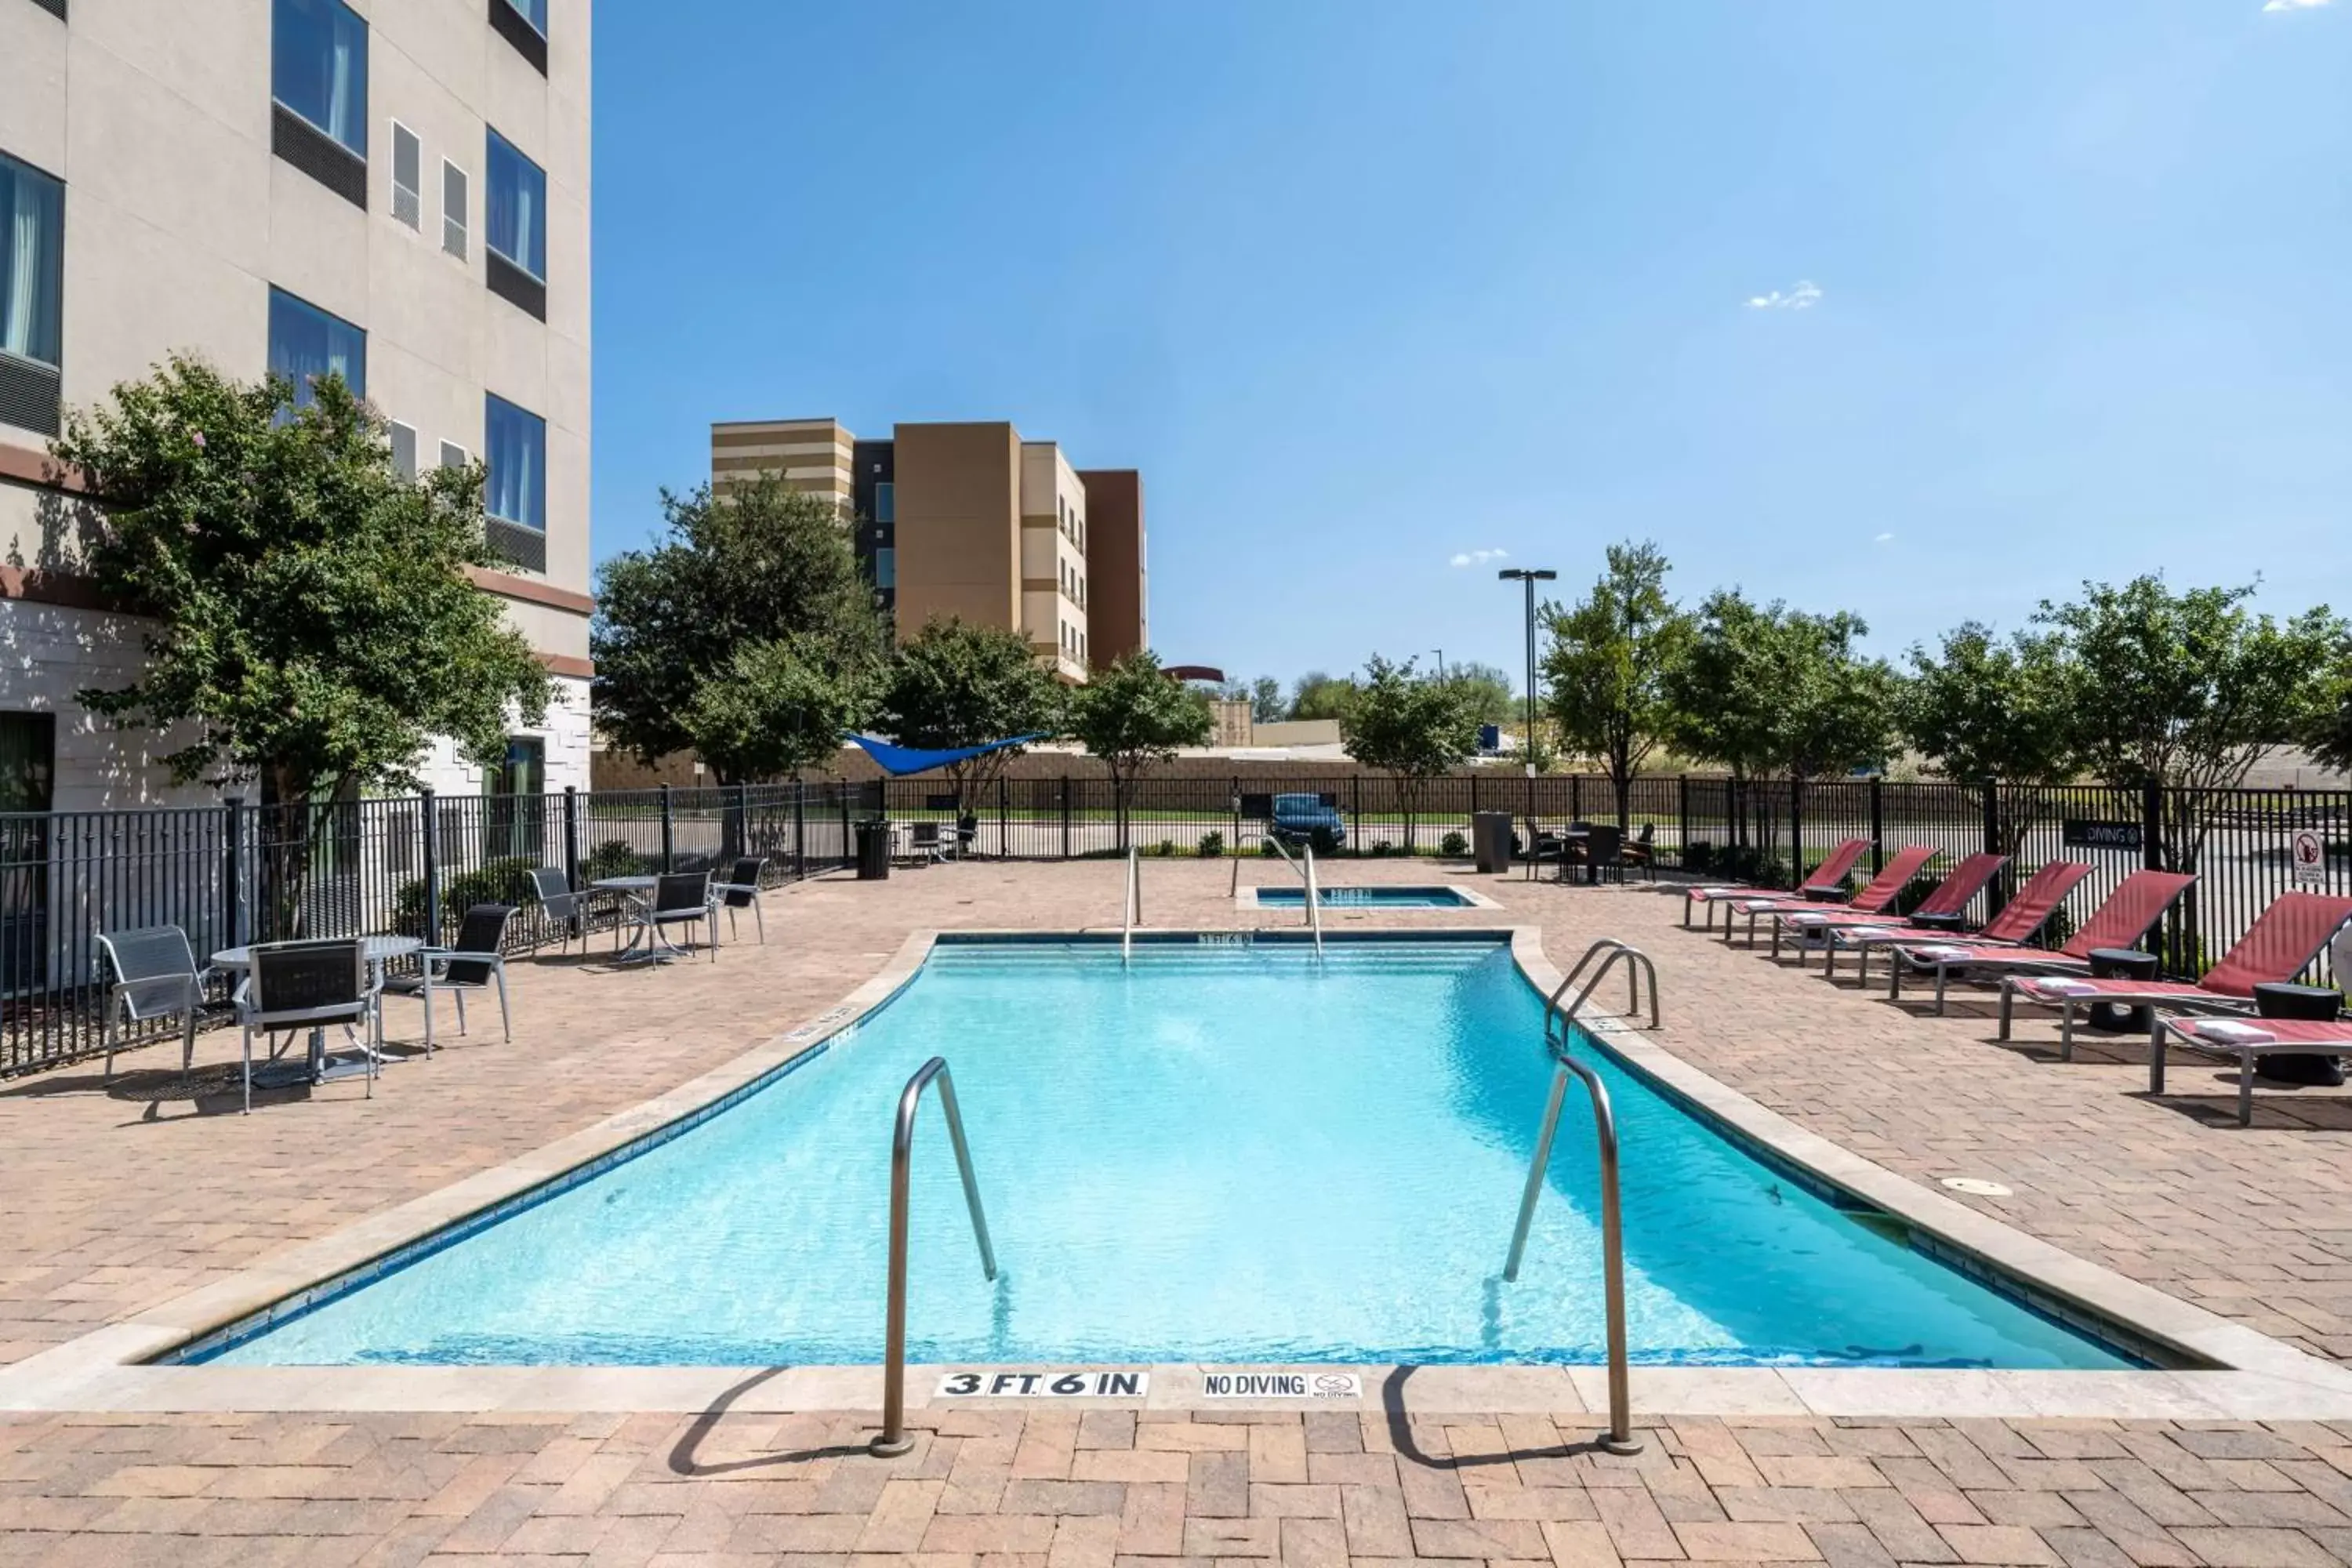 Swimming Pool in Hilton Garden Inn Ft Worth Alliance Airport